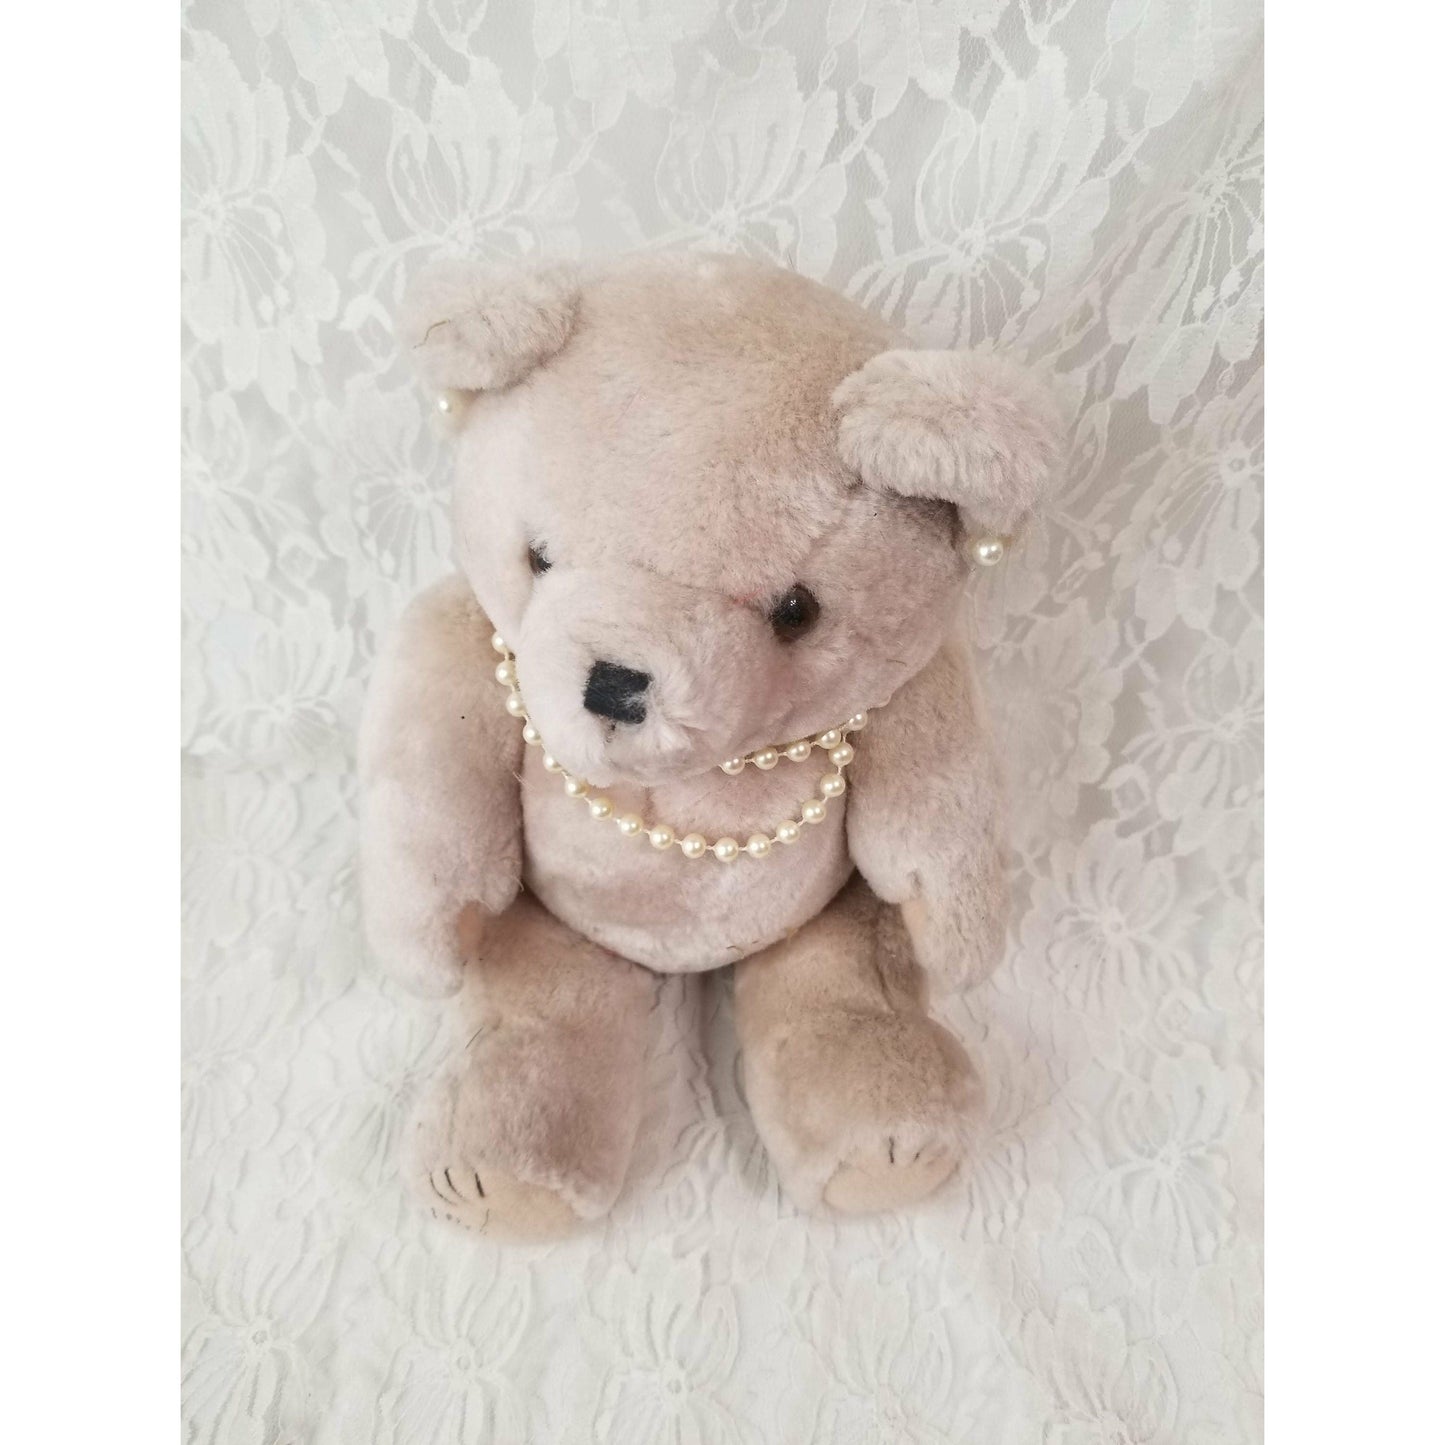 Handmade PLUSH Teddy Bear ~ OOAK Jointed Art Bear w/ Pearls ~ Ready for Dressing